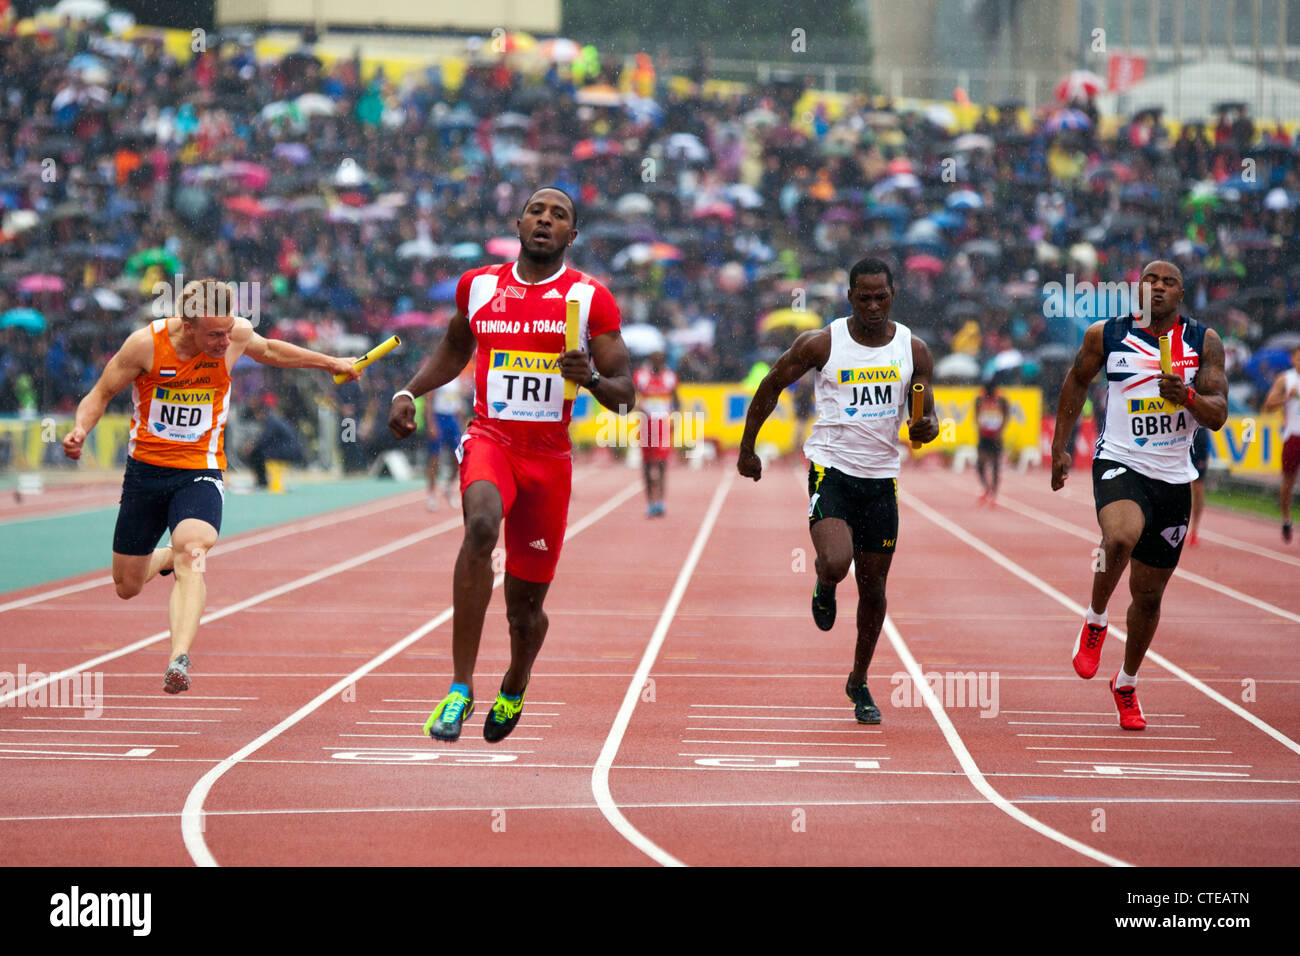 Men's 4x100m relay race, AVIVA London Athletics Grand Prix 2012 Stock Photo